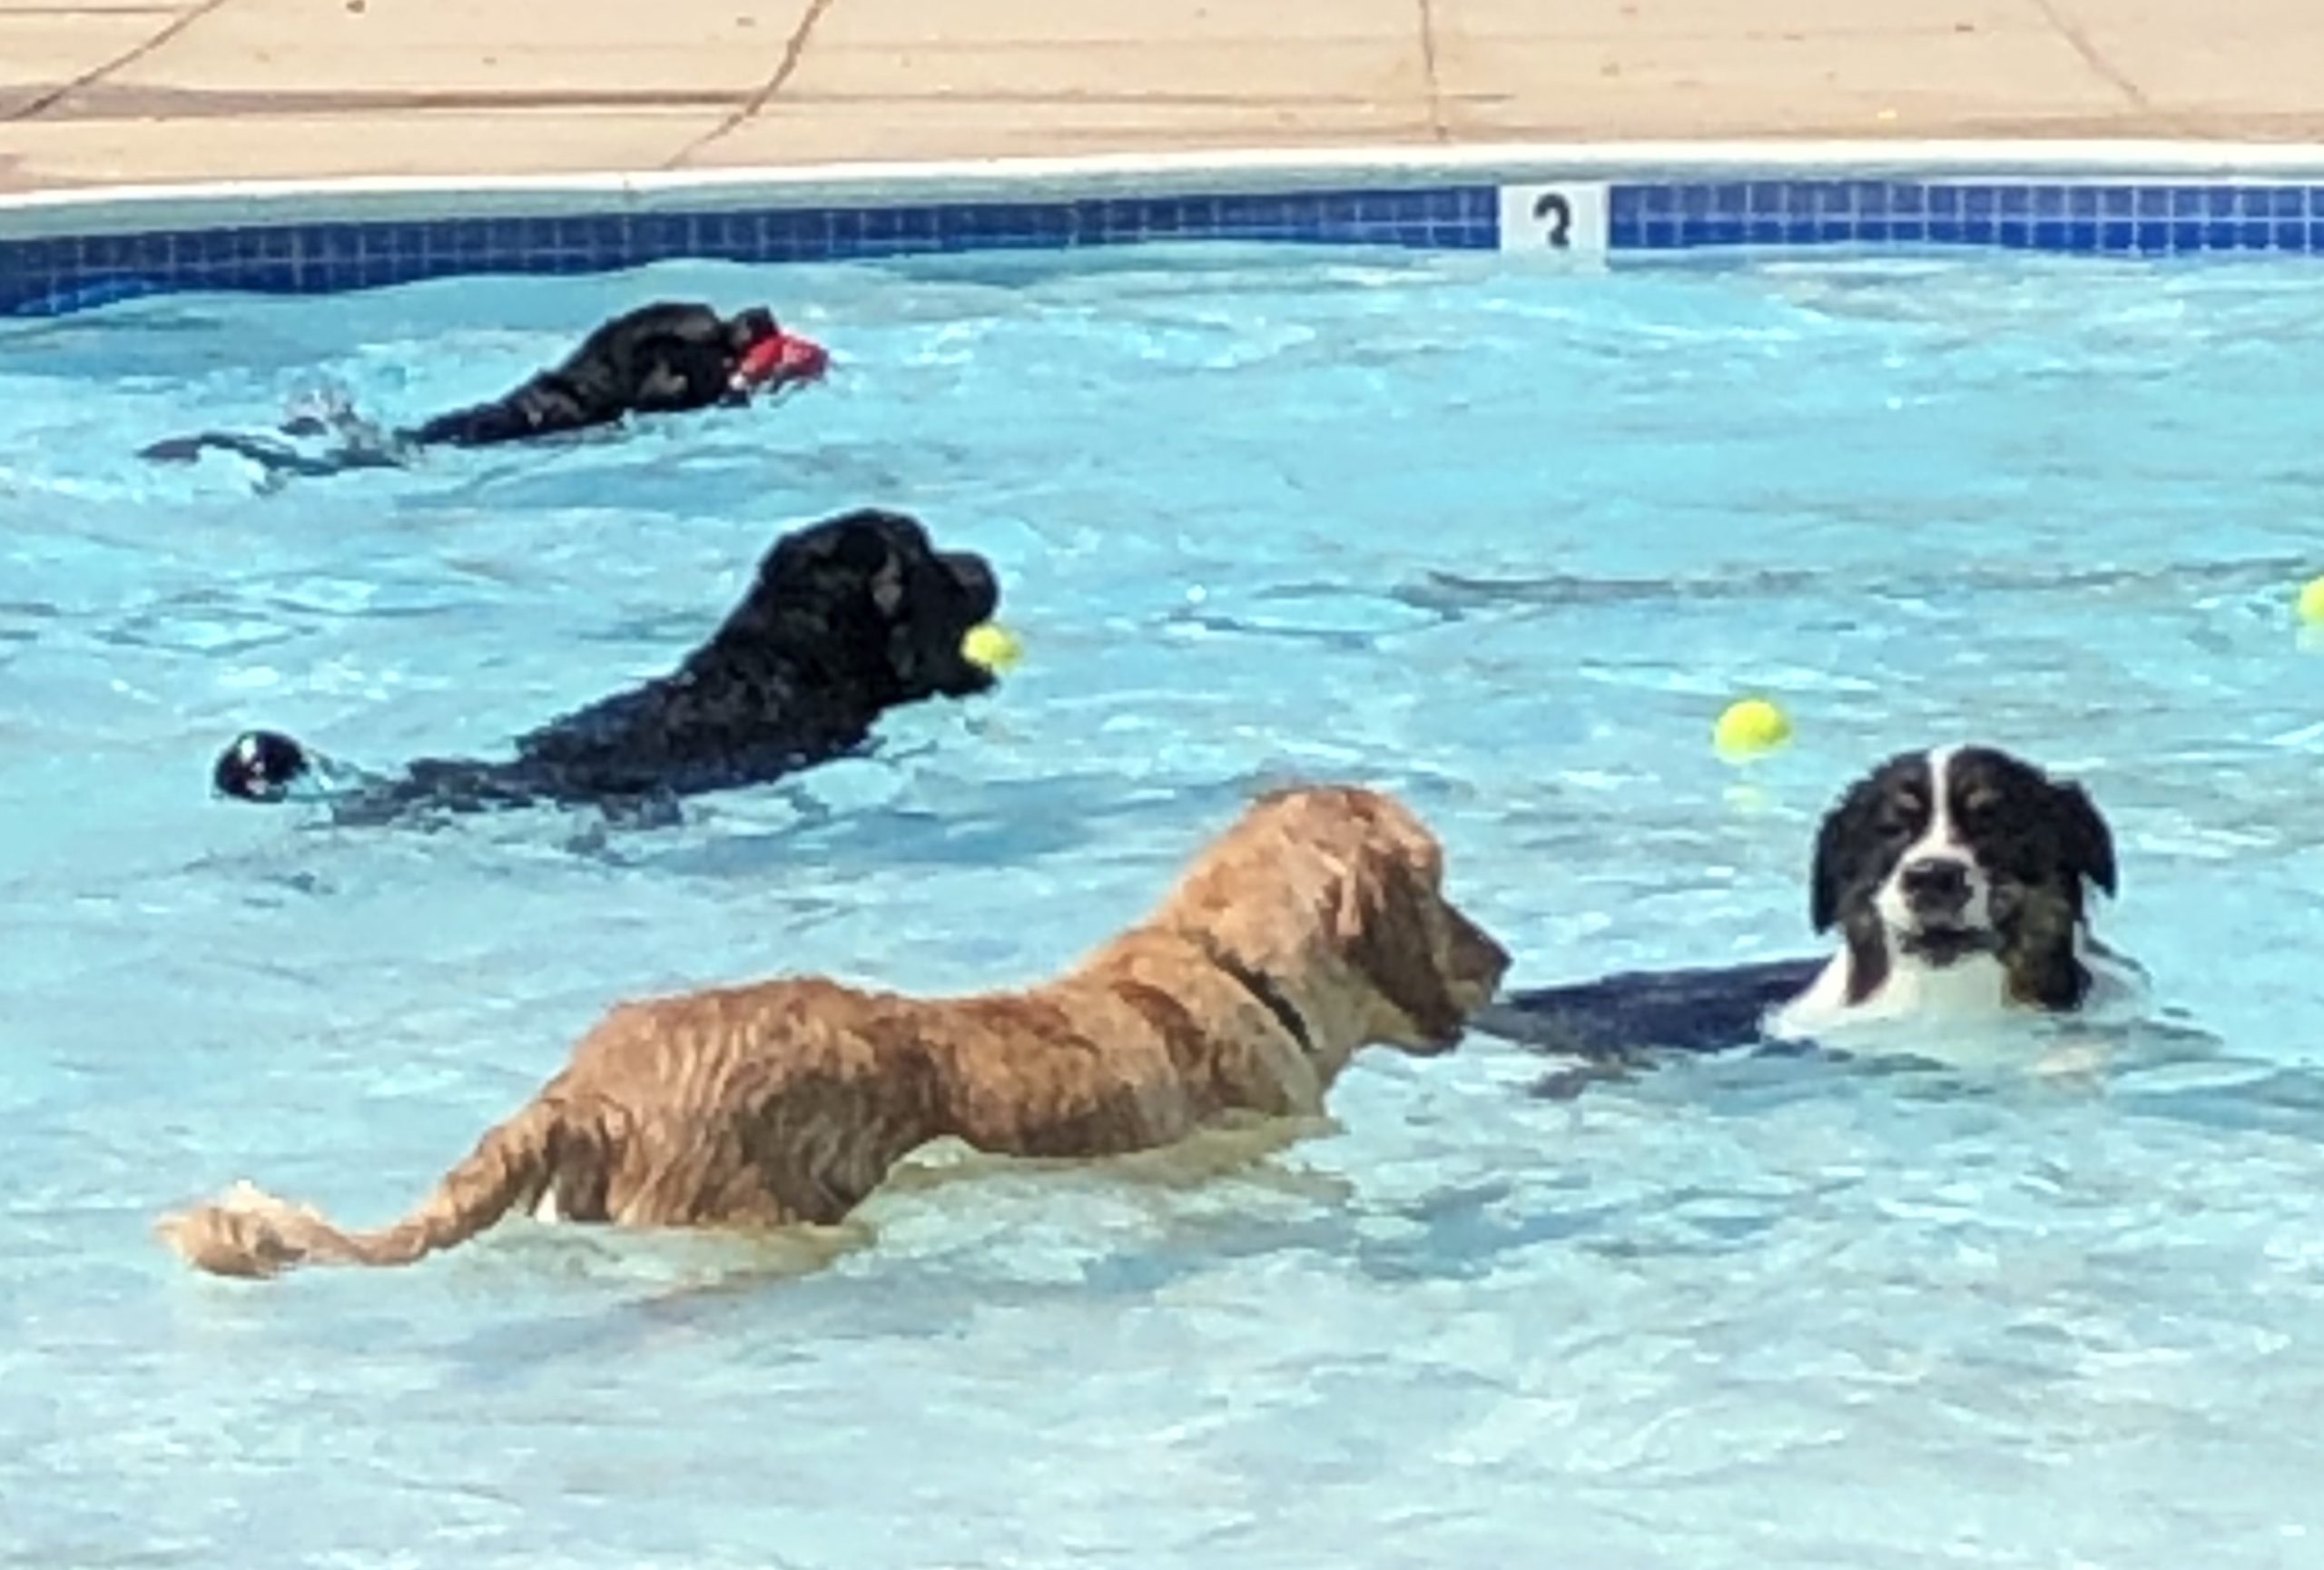 dog day pool